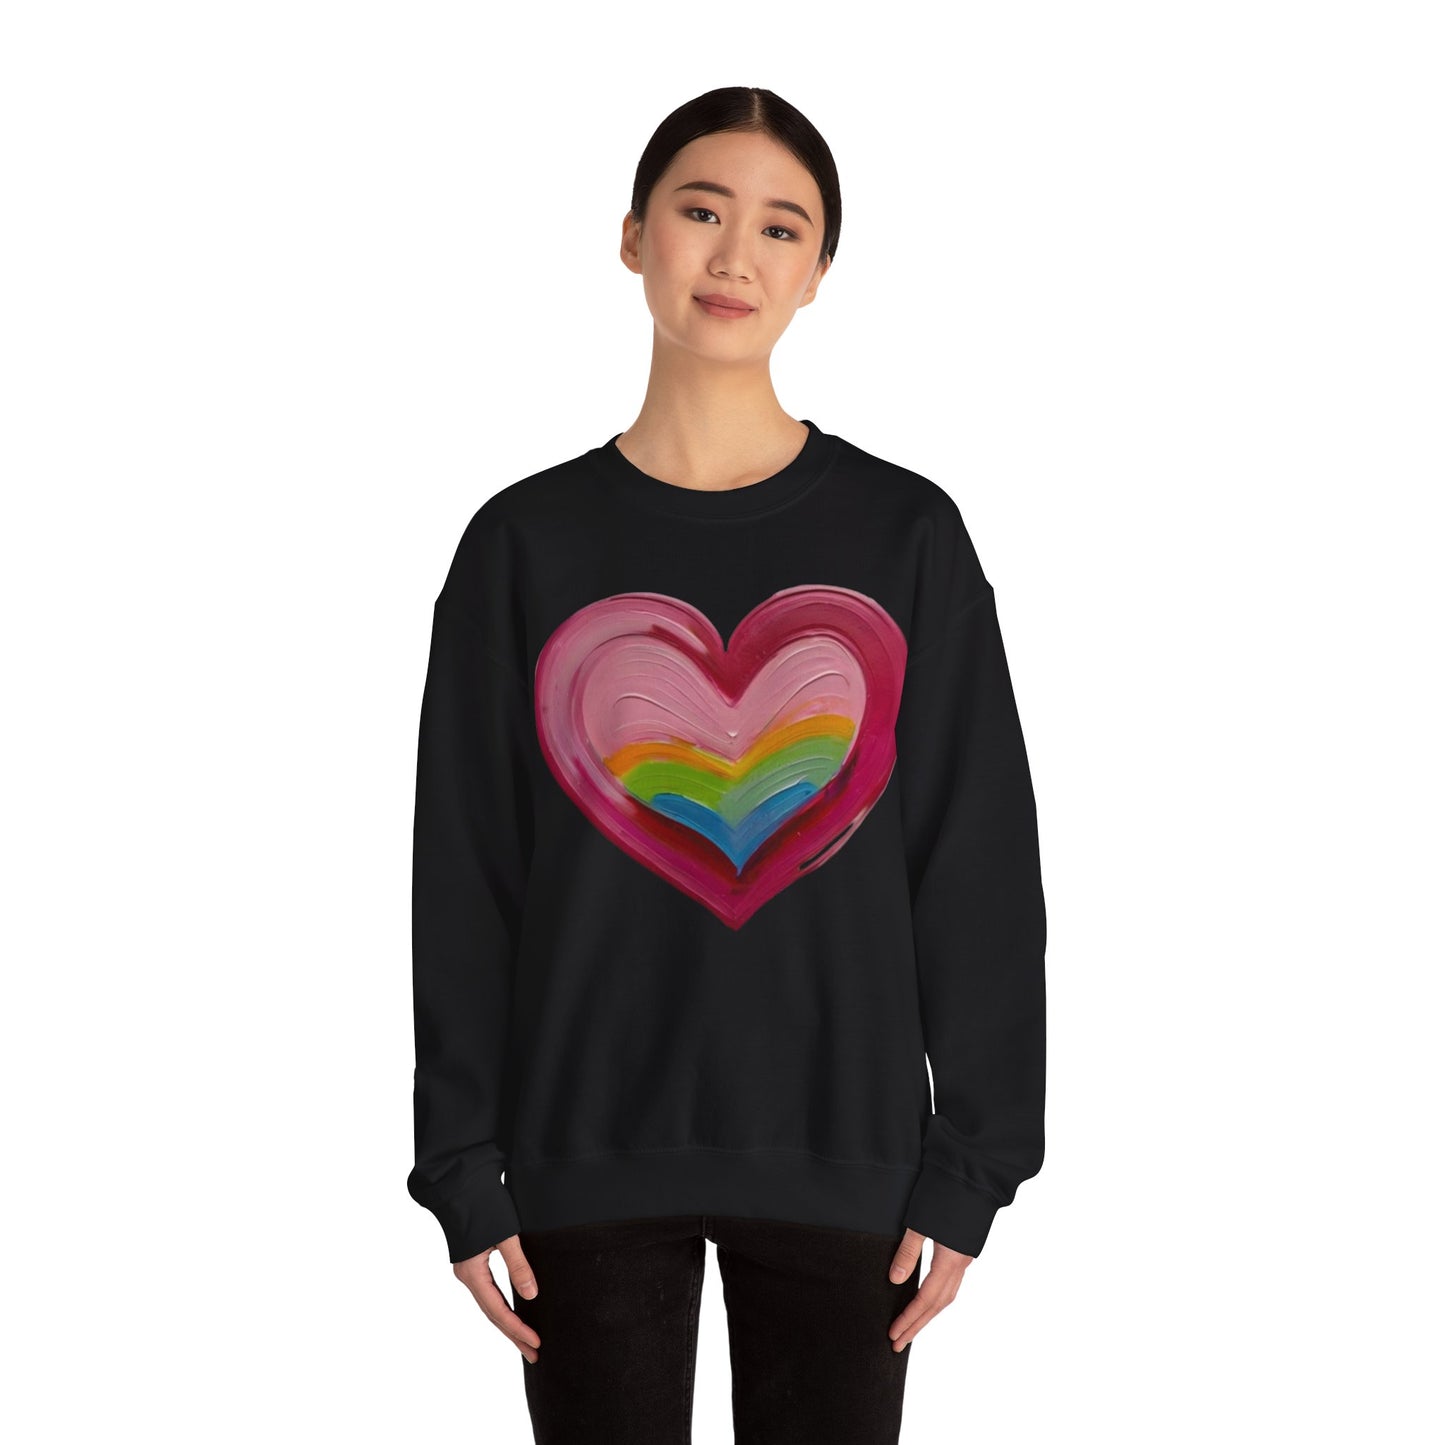 Pink Painted Love Heart - Unisex Crewneck Sweatshirt